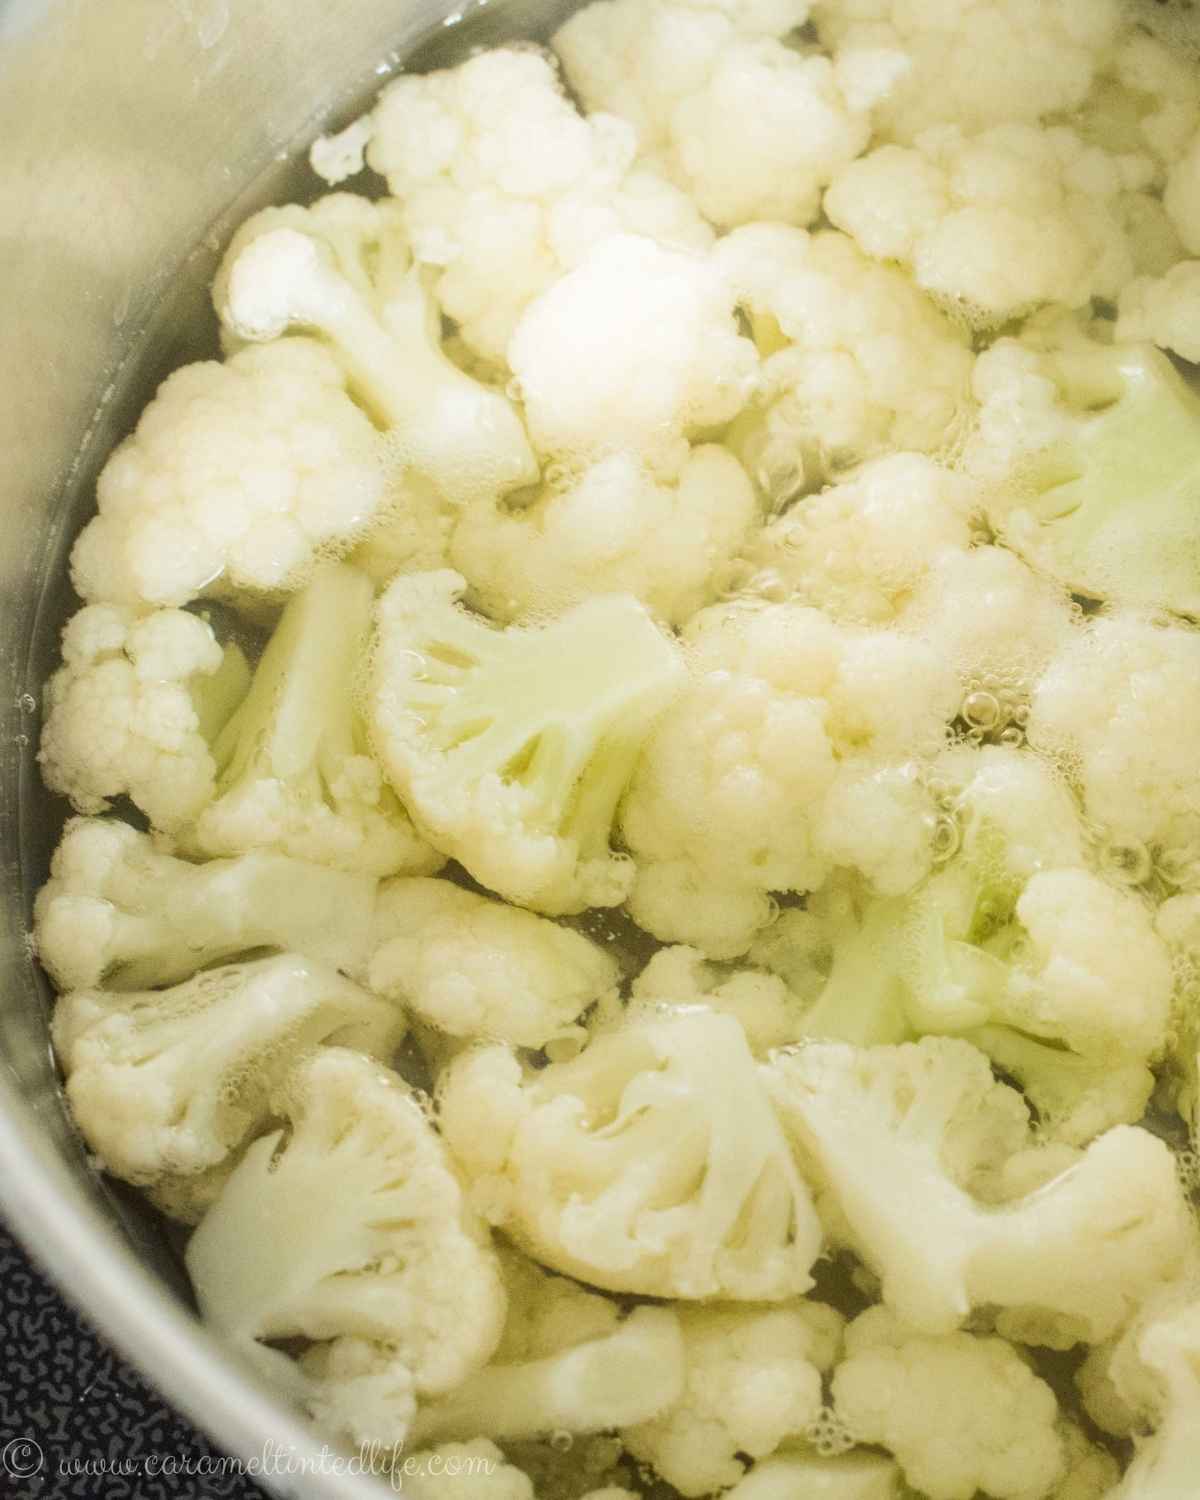 Par-boiling cauliflower in water